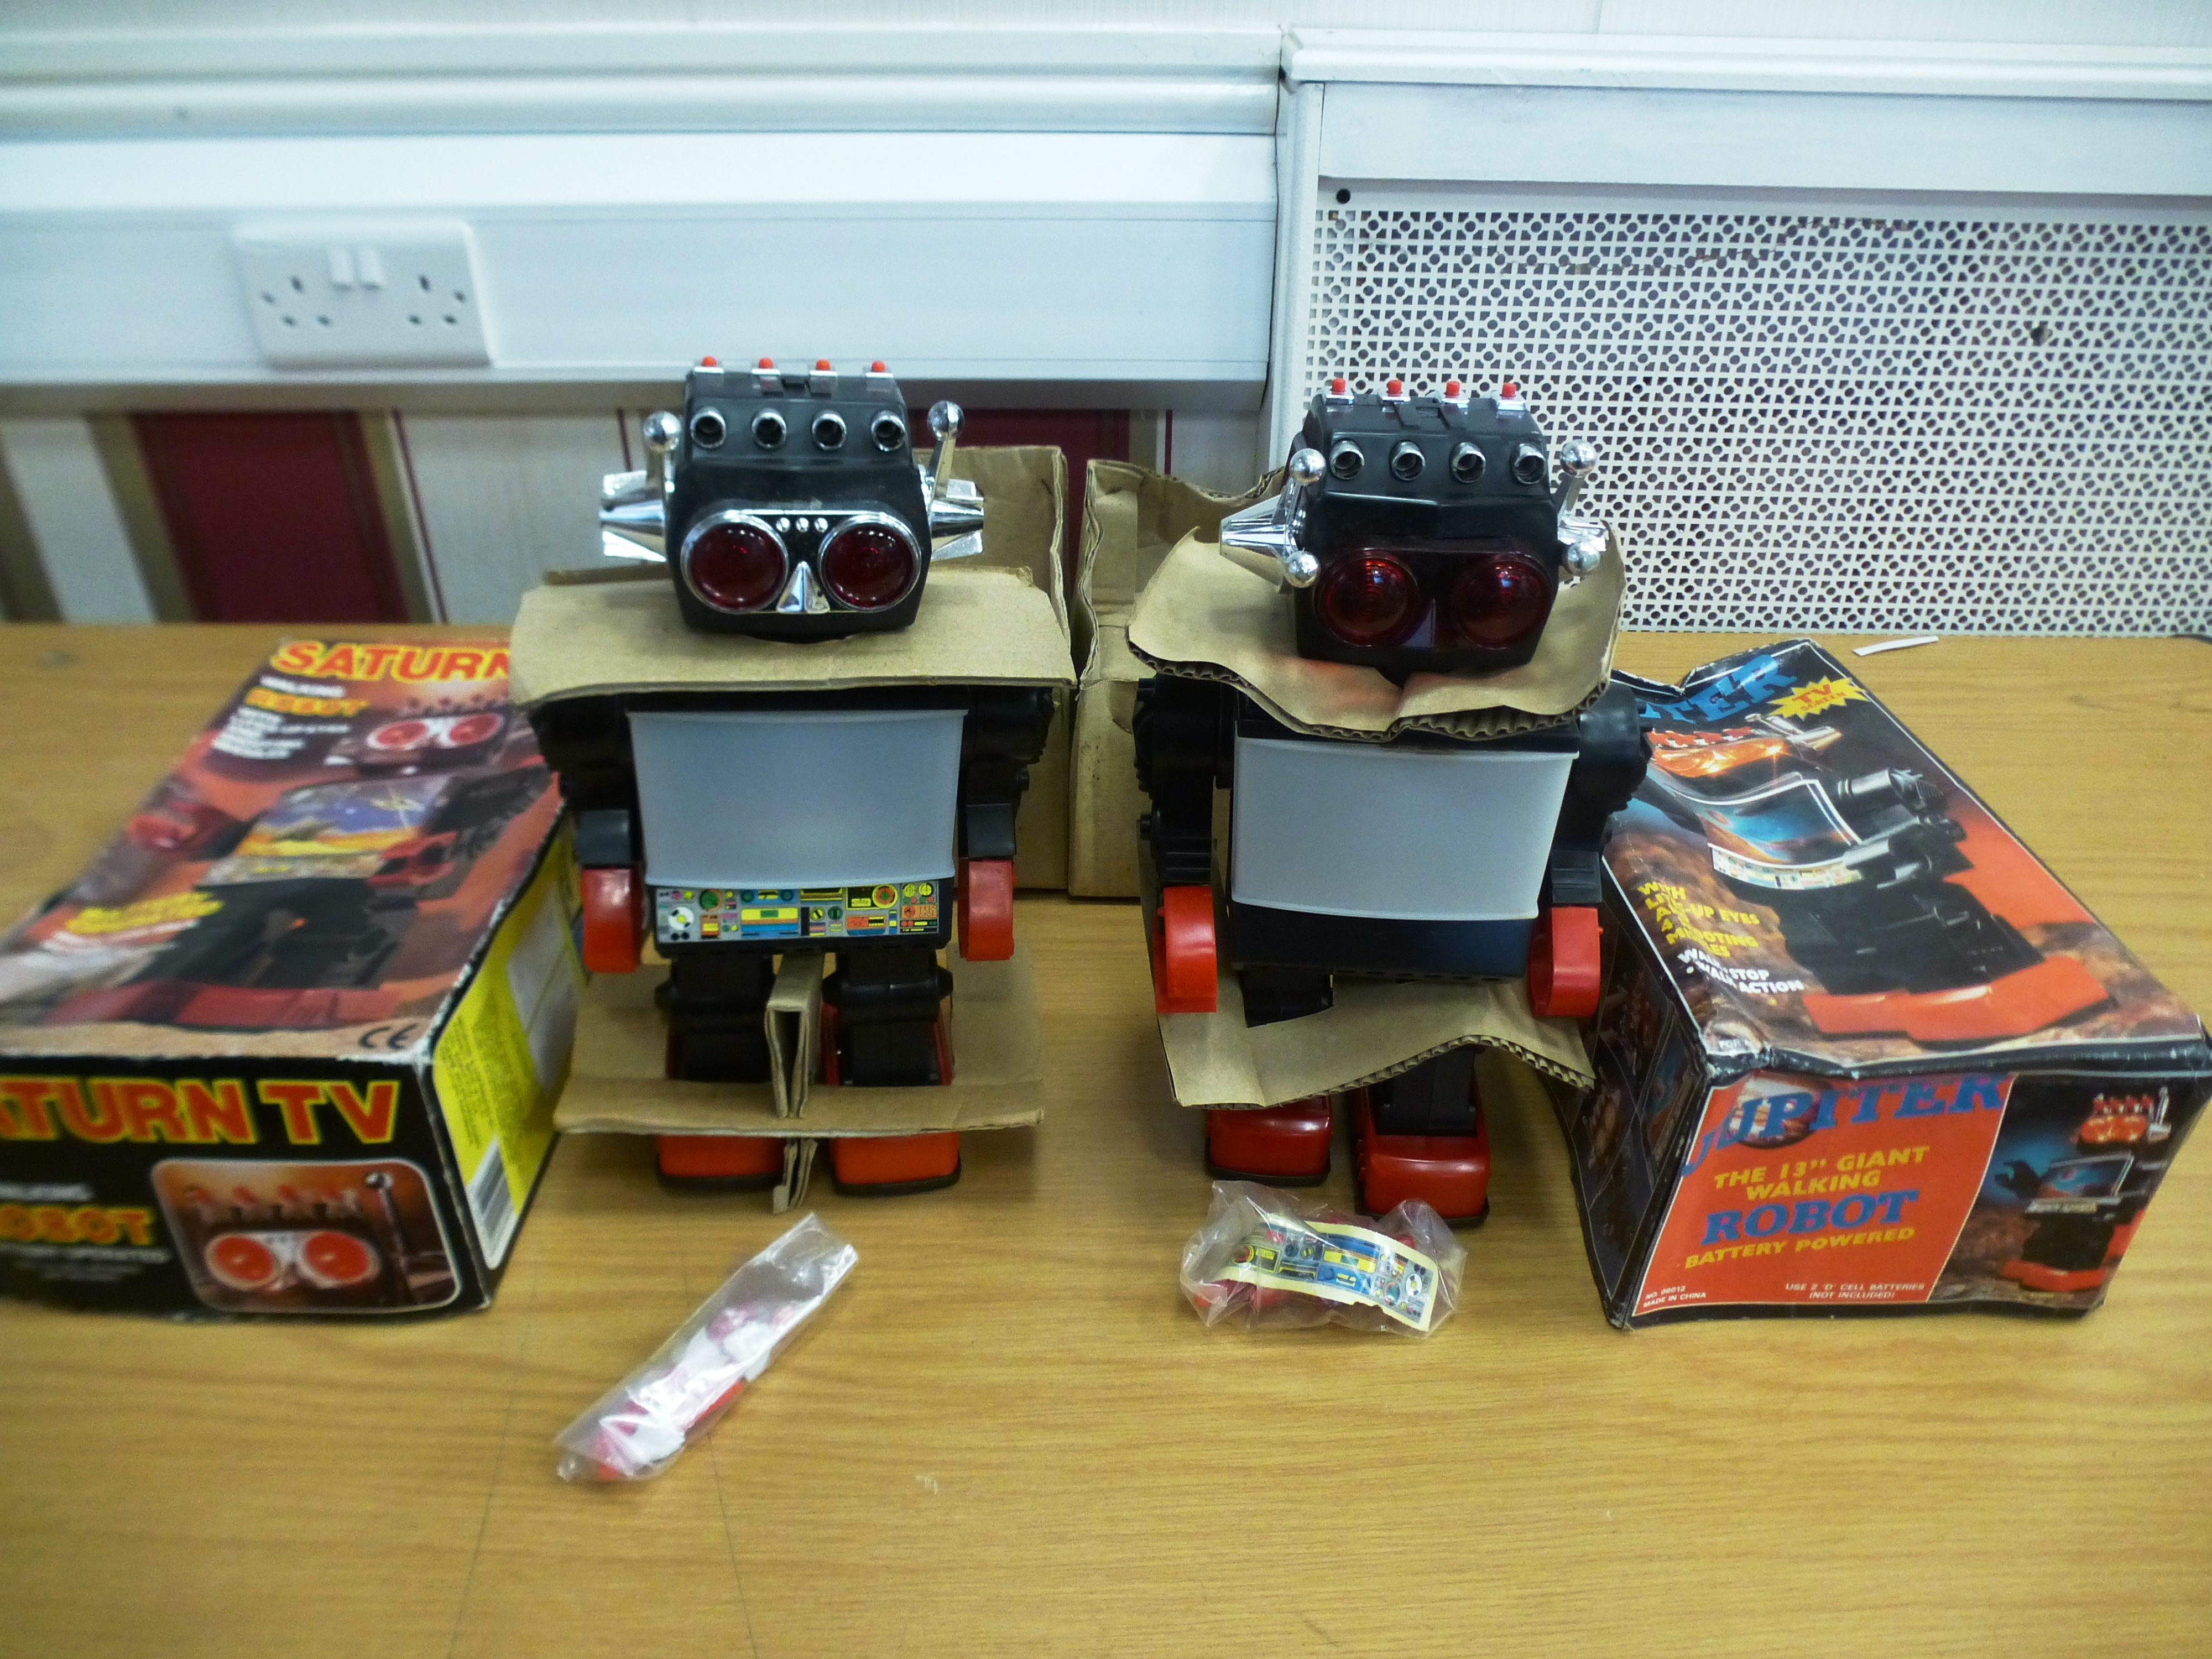 2 BOXED TV SCREEN ROBOTS - JUPITER AND SATURN - Image 5 of 6